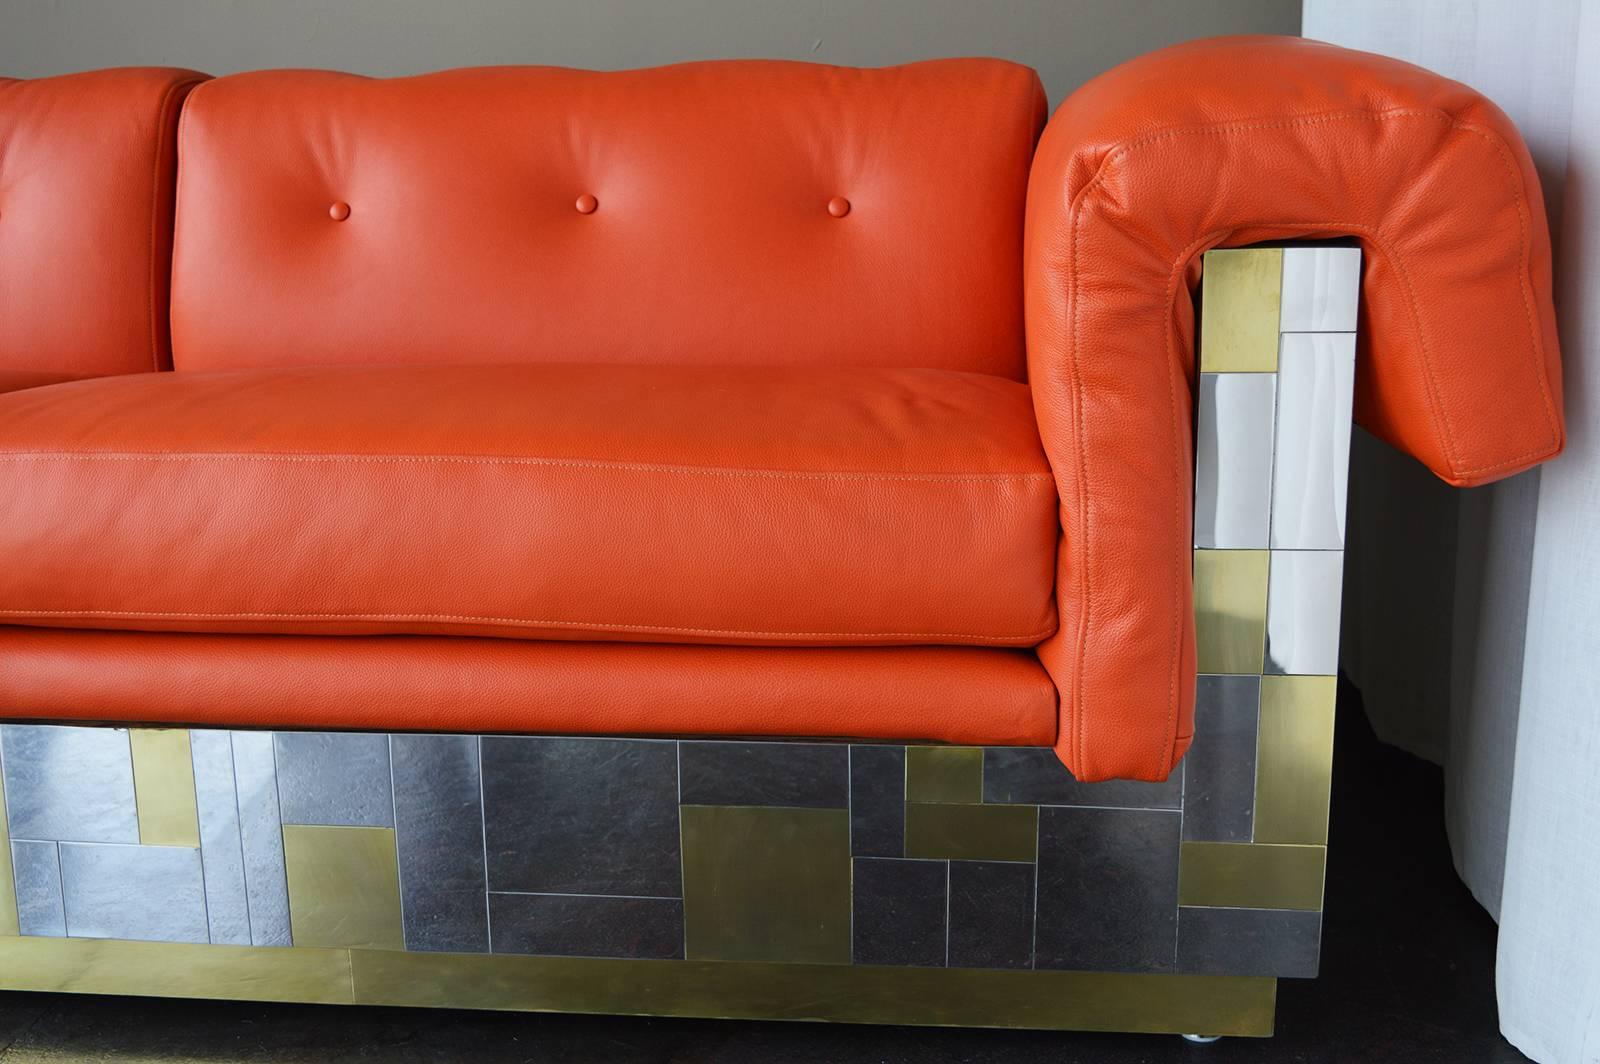 Cityscape sofa by Paul Evans. Hermes orange leather, custom upholstery.
Measure: 19